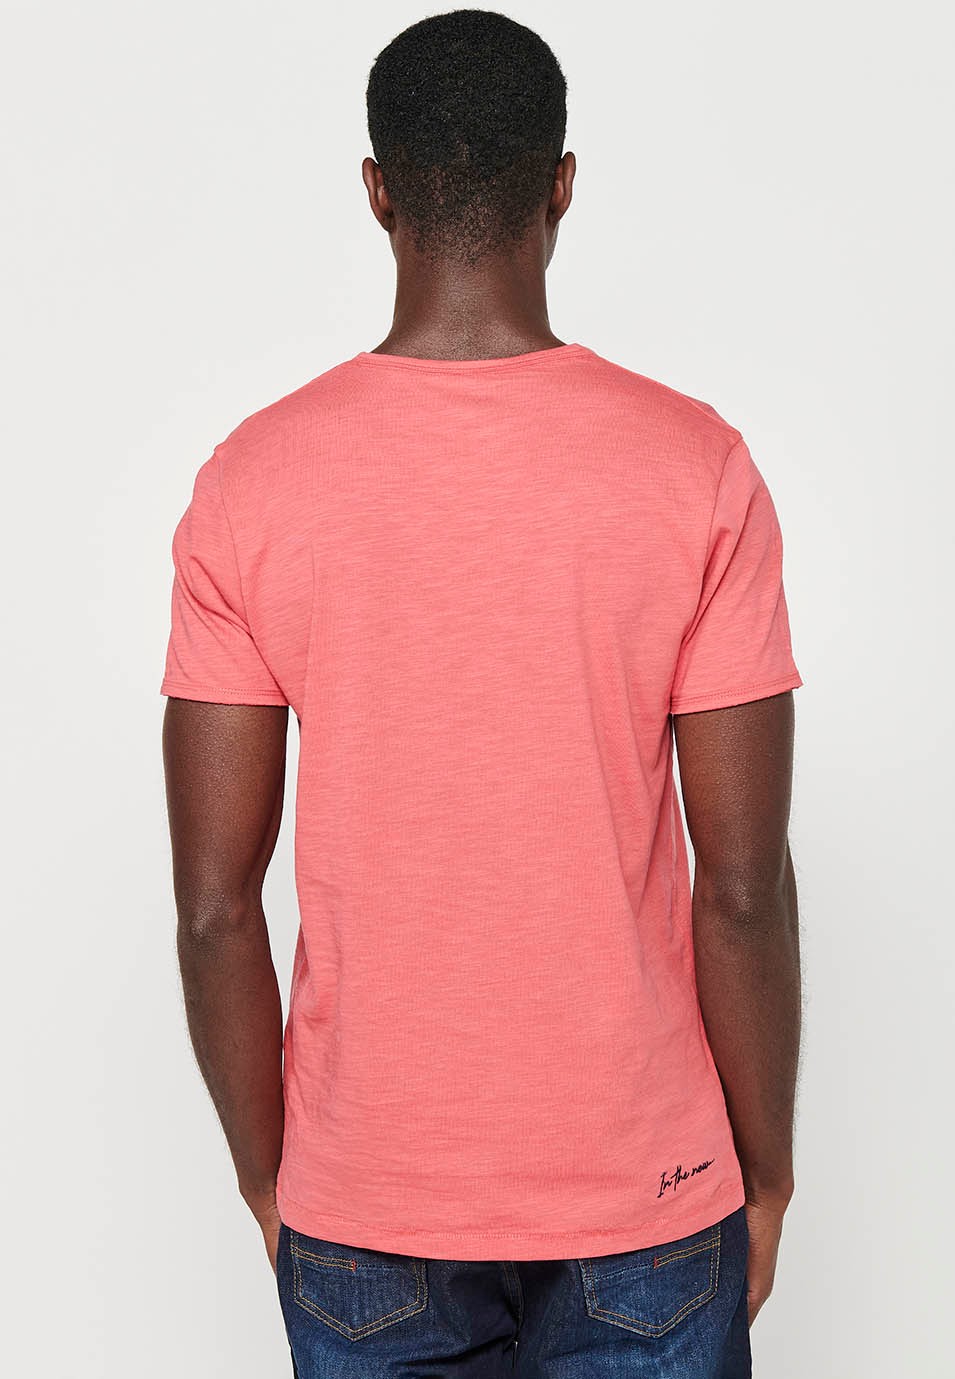 Camiseta básica de manga corta de algodón, cuello V con boton, color rosa para hombre 3